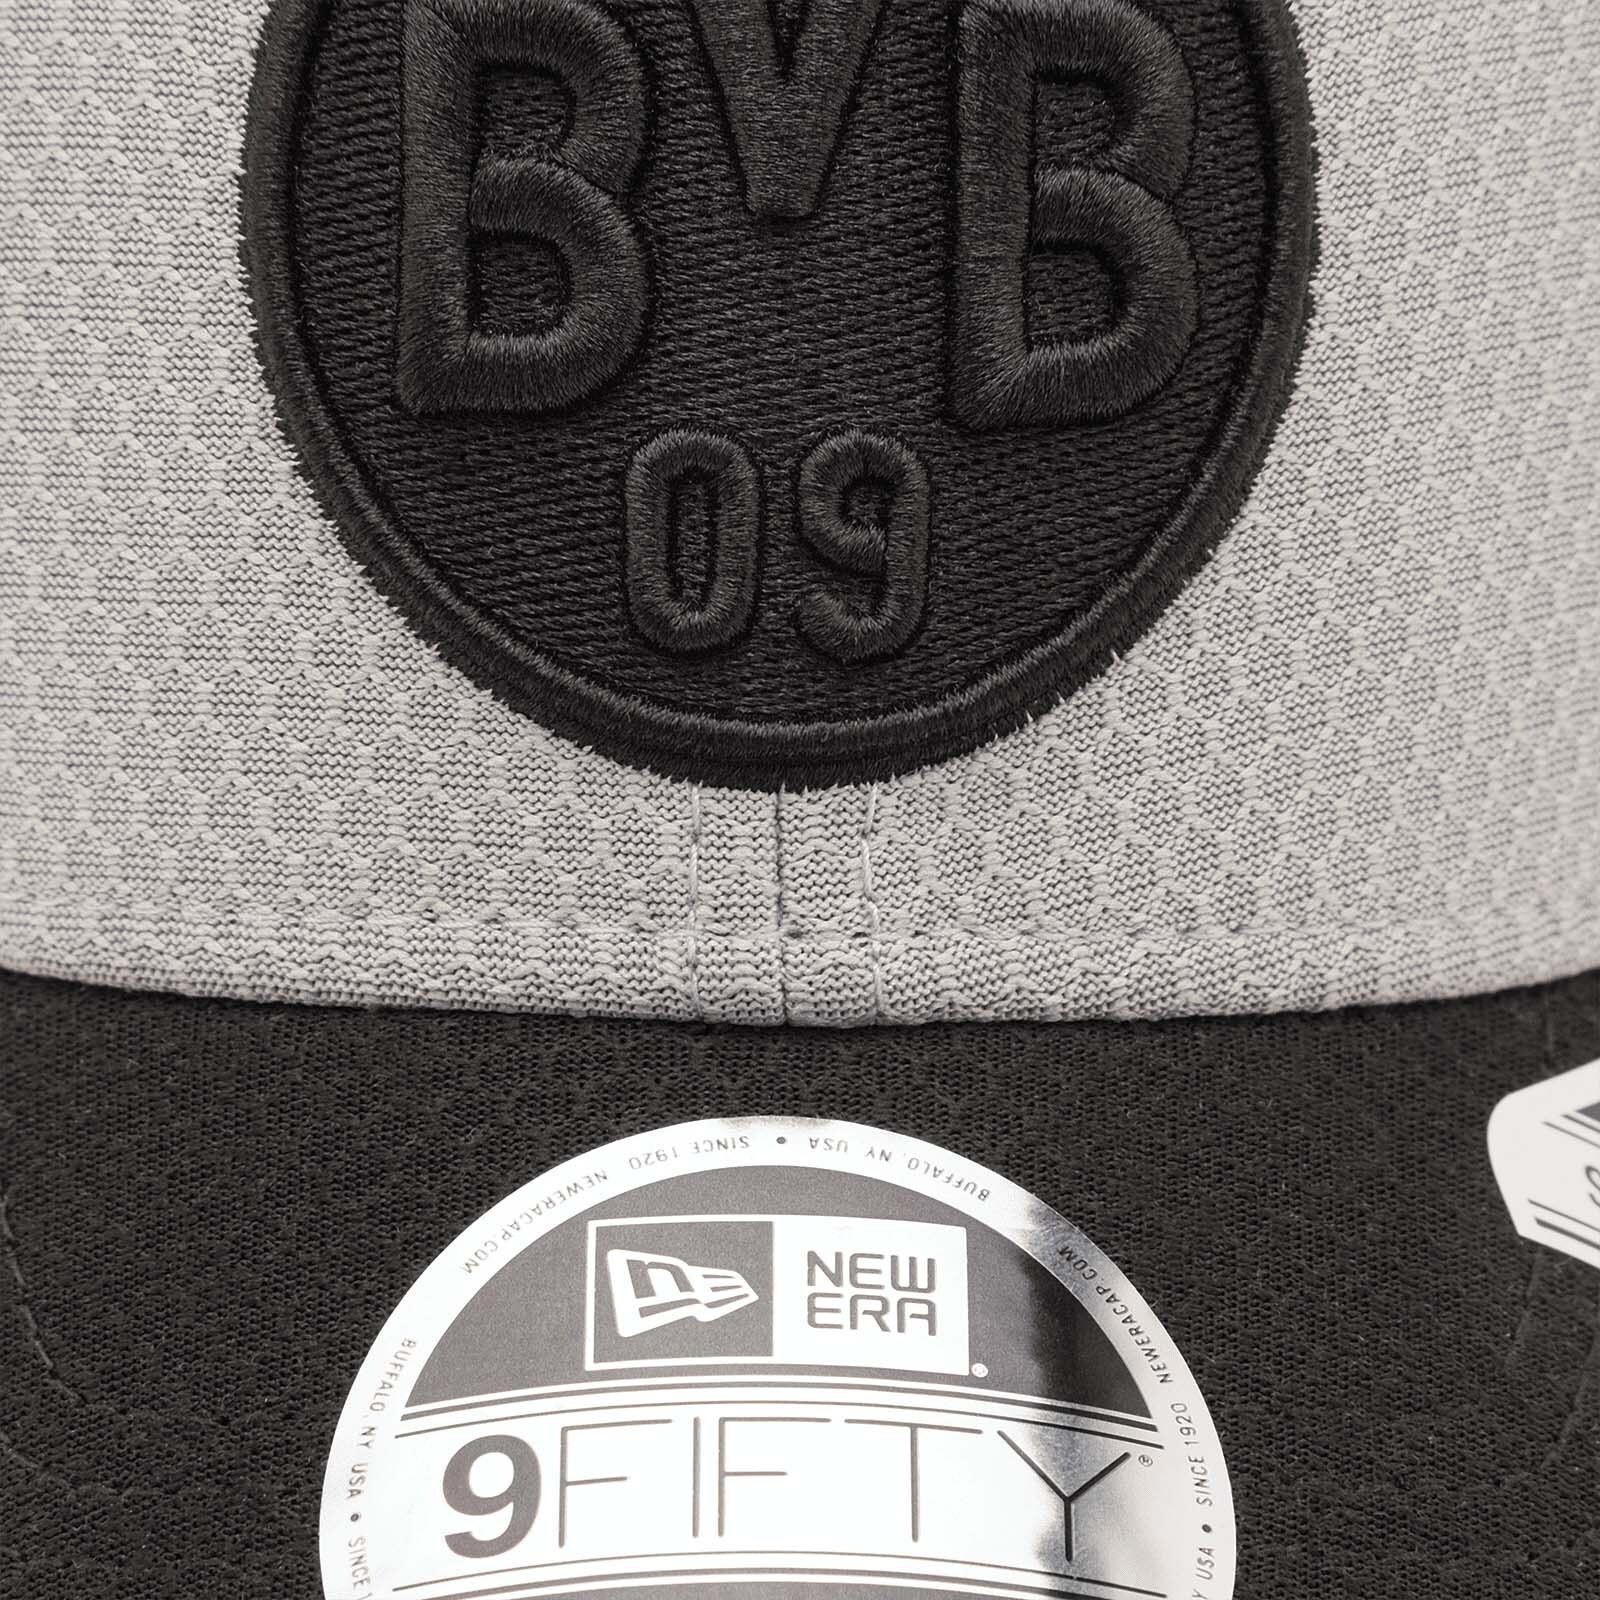 BVB 09 Borussia Dortmund Grey Black 9Fifty Adjustable Stretch Snapback Cap New Era